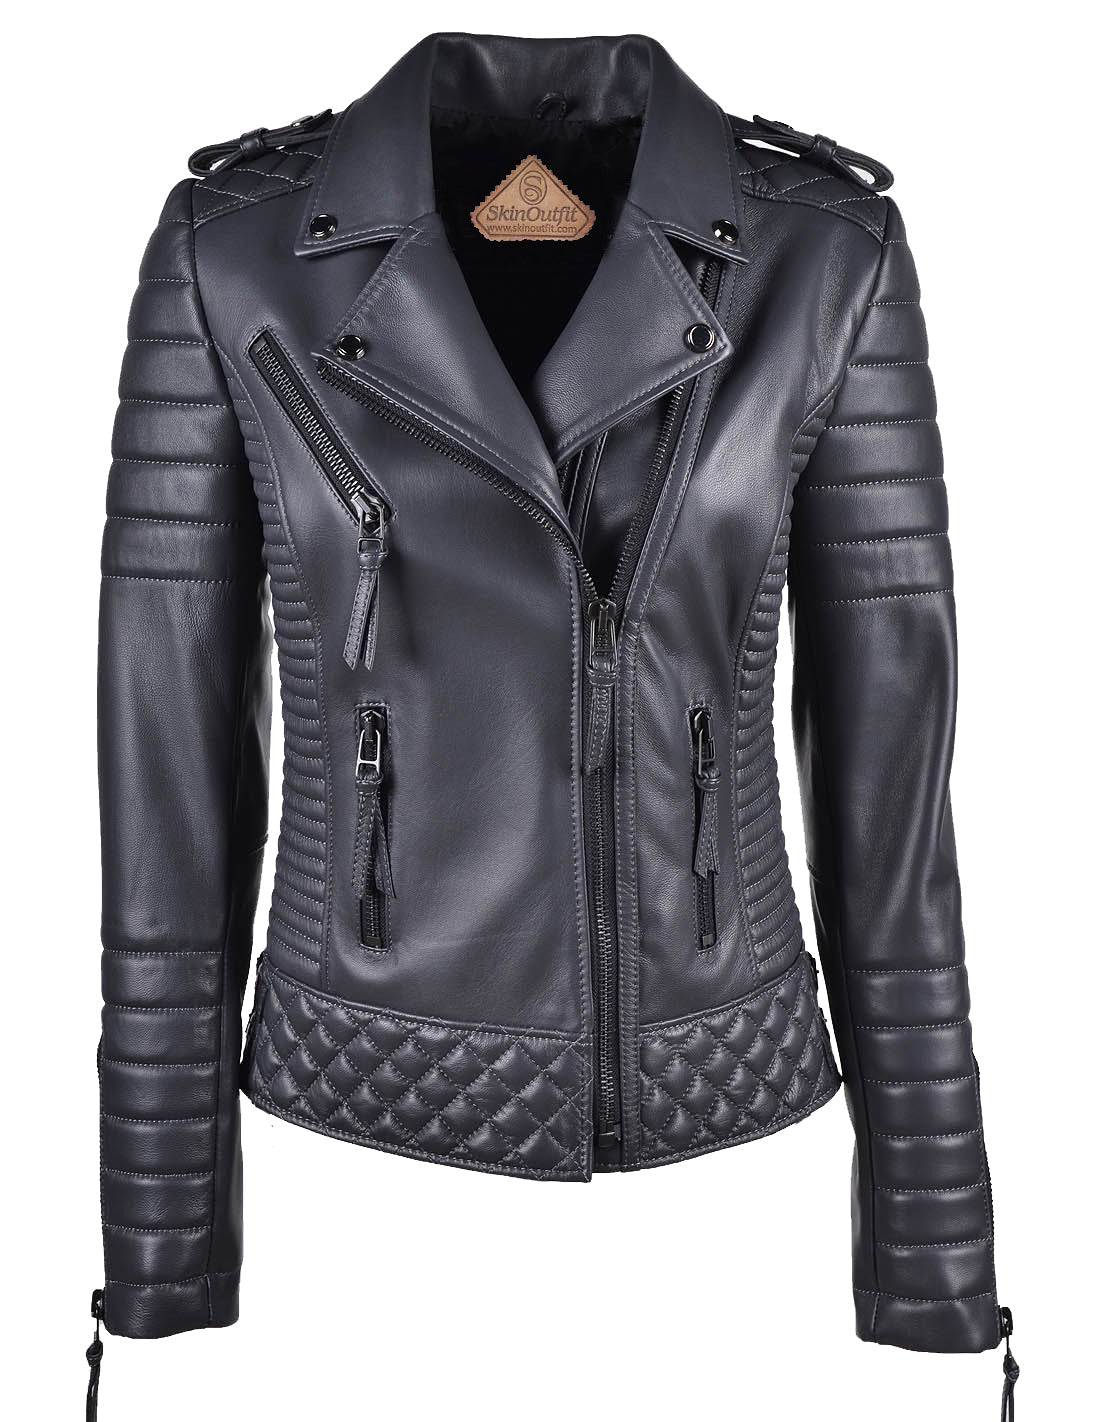 Women's Motorcycle Leather Jacket Black freeshipping - SkinOutfit